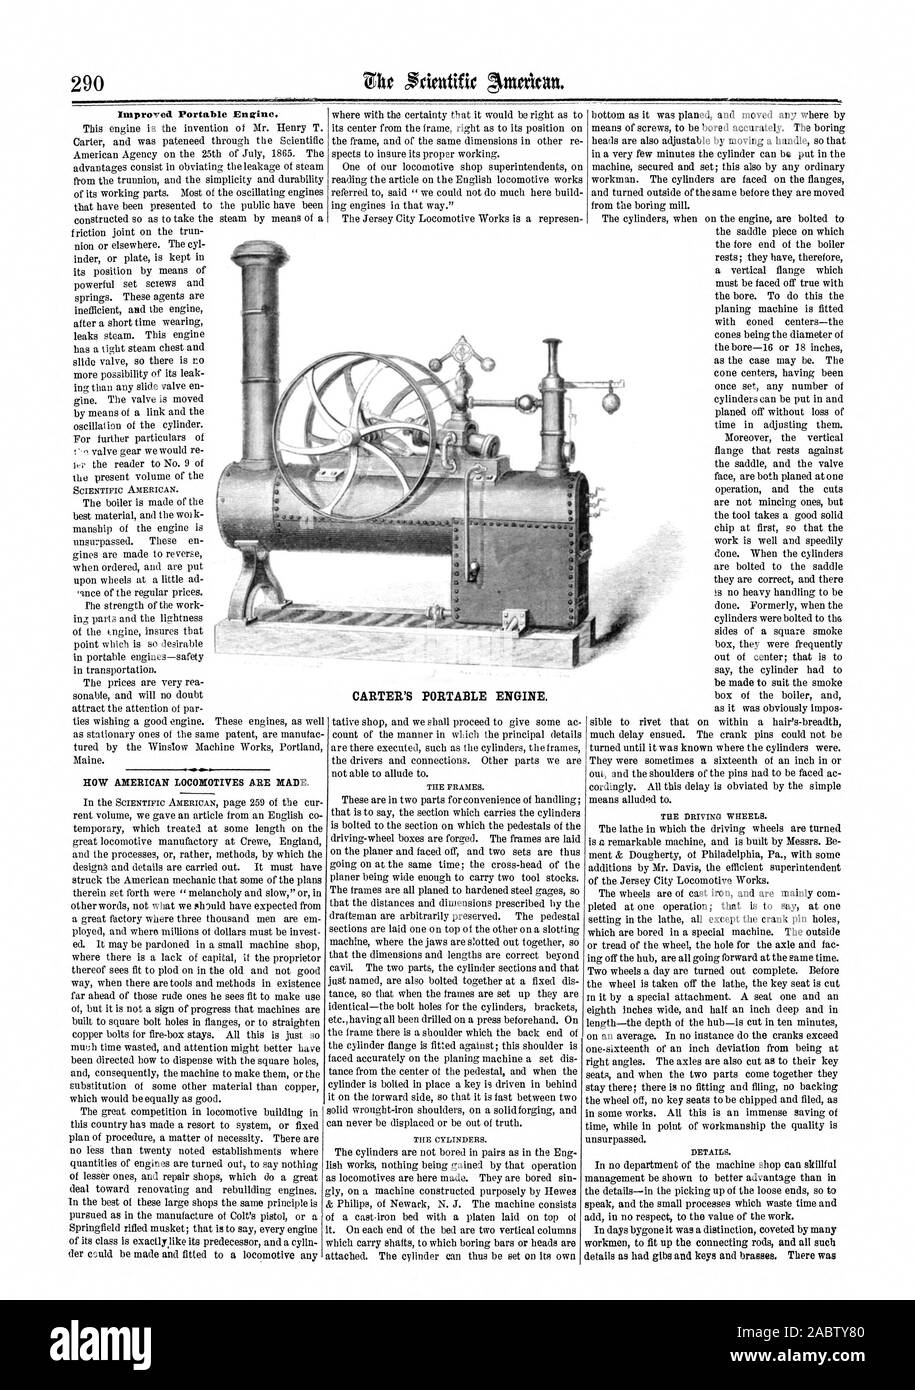 CARTER'S PORTABLE ENGINE., scientific american, 1865-11-04 Stock Photo